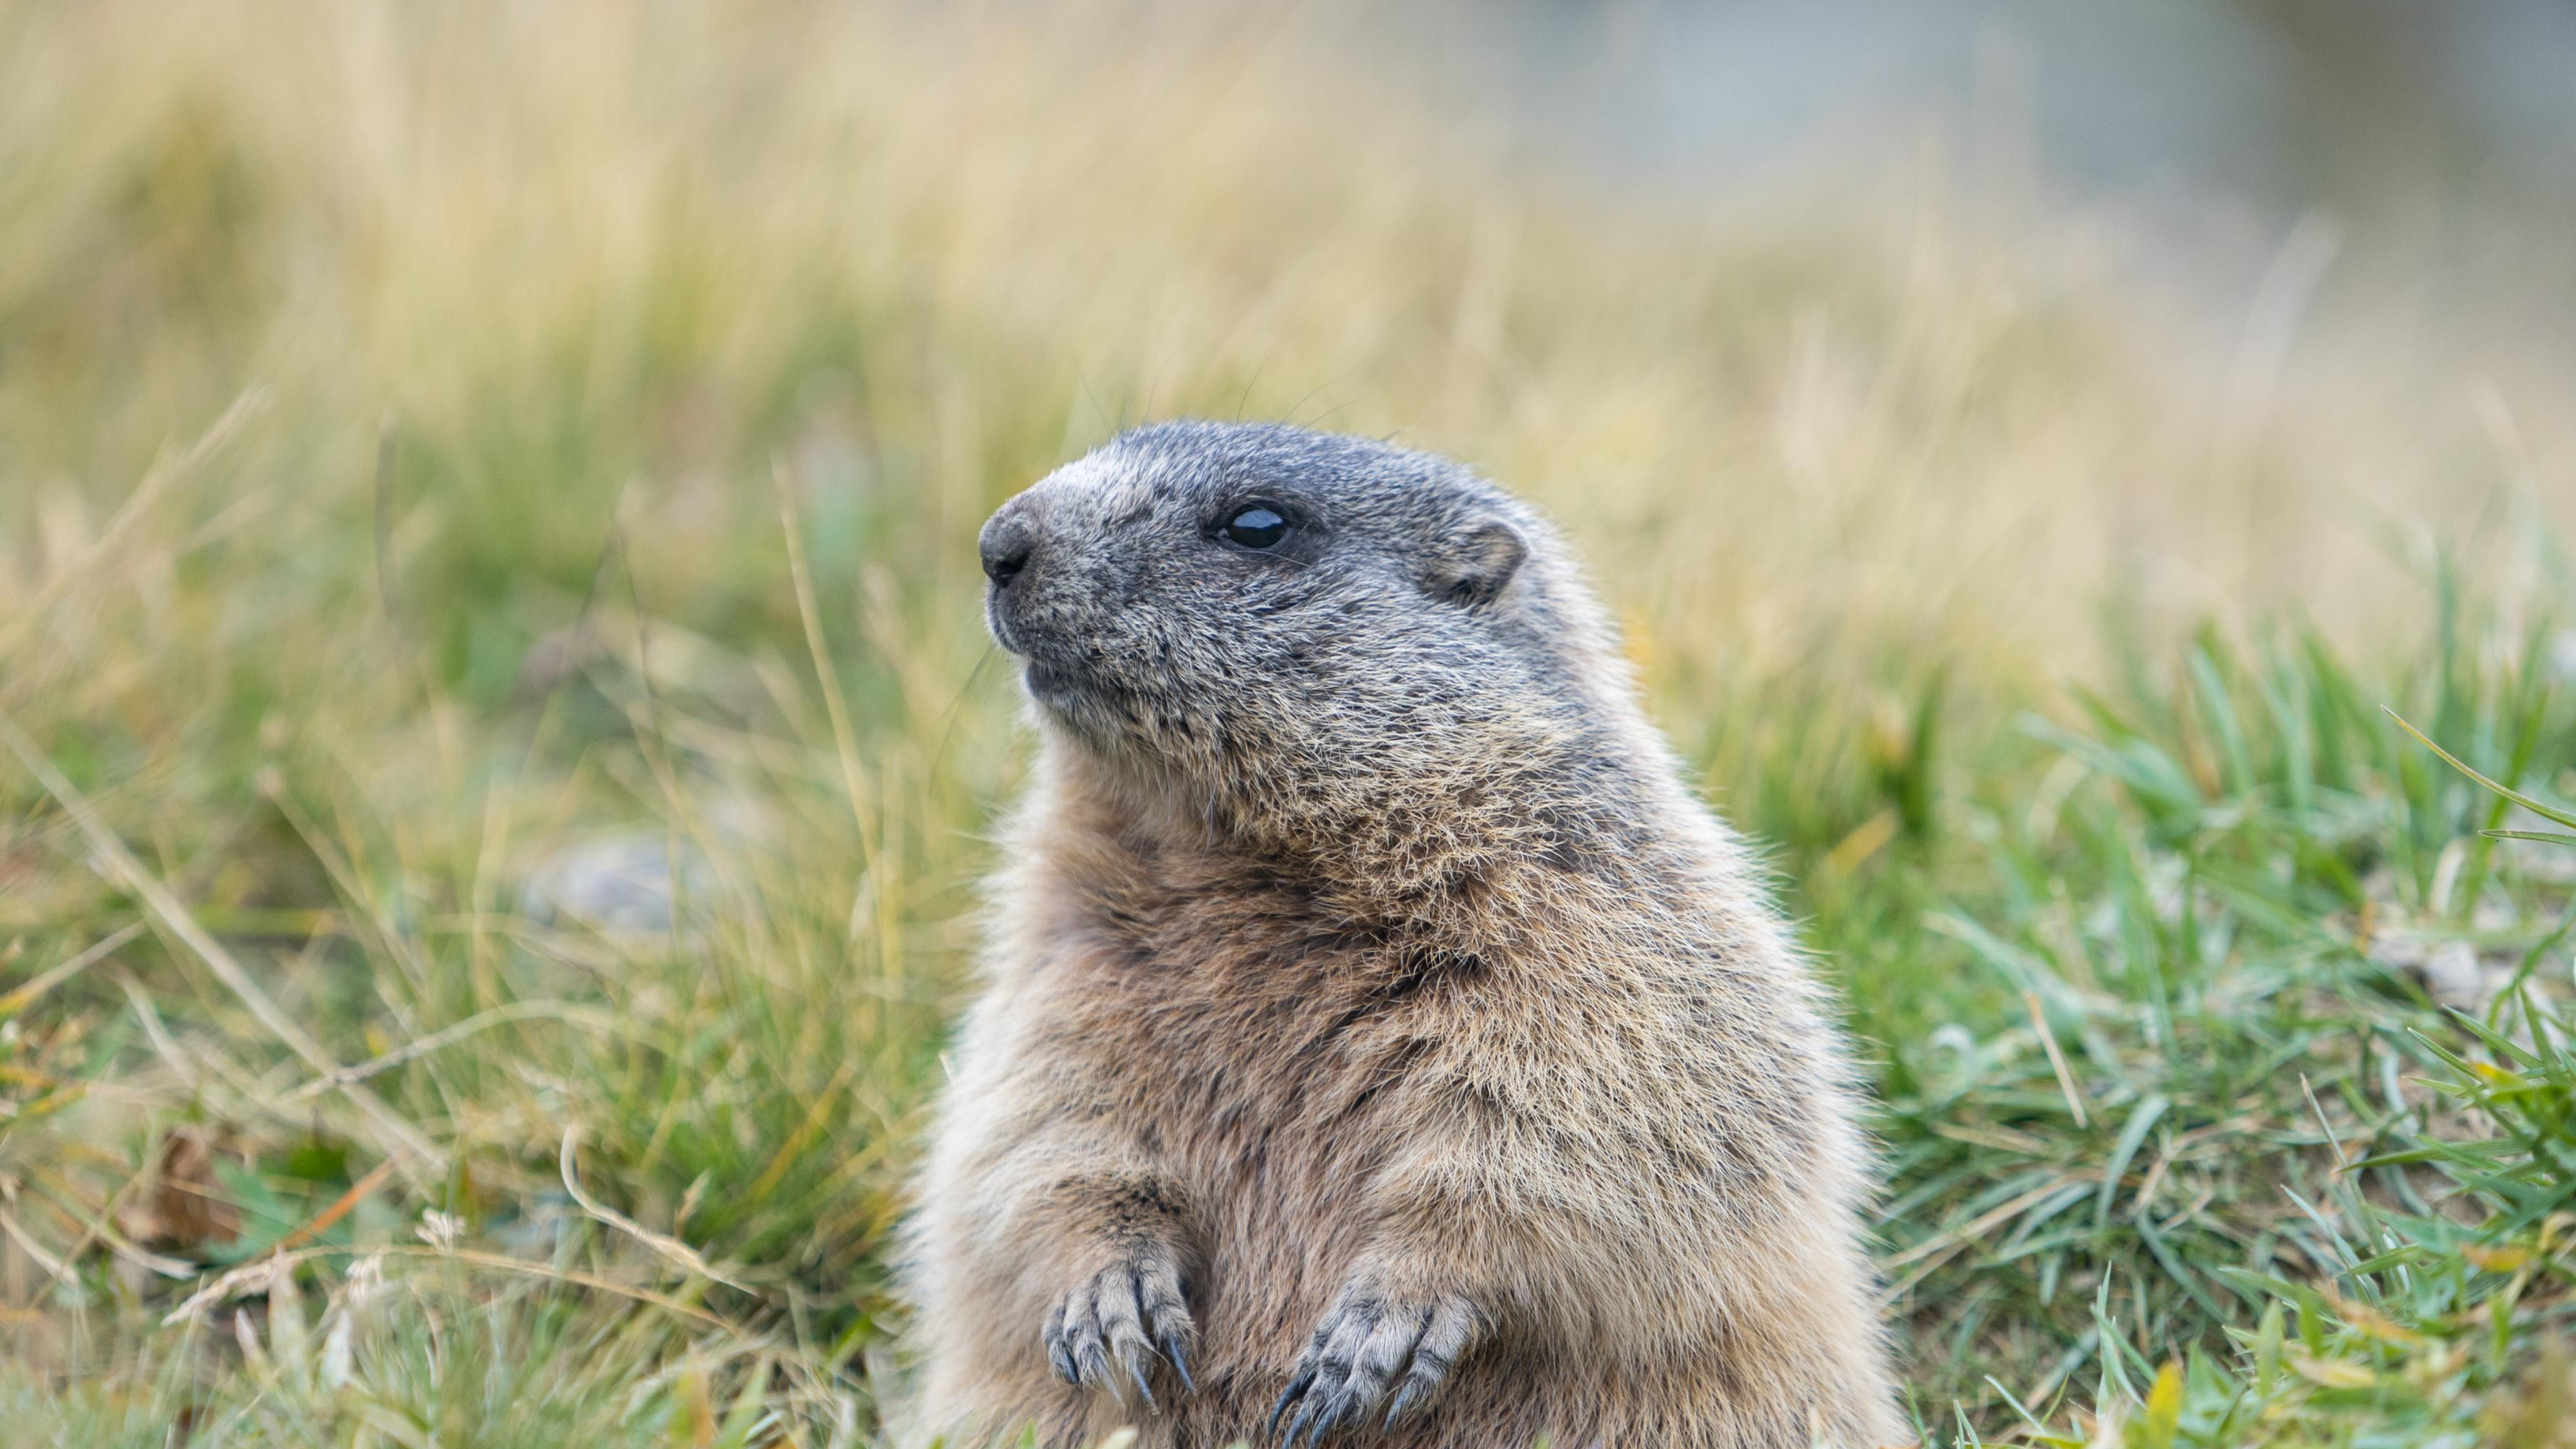 A groundhog peeks his head over grass